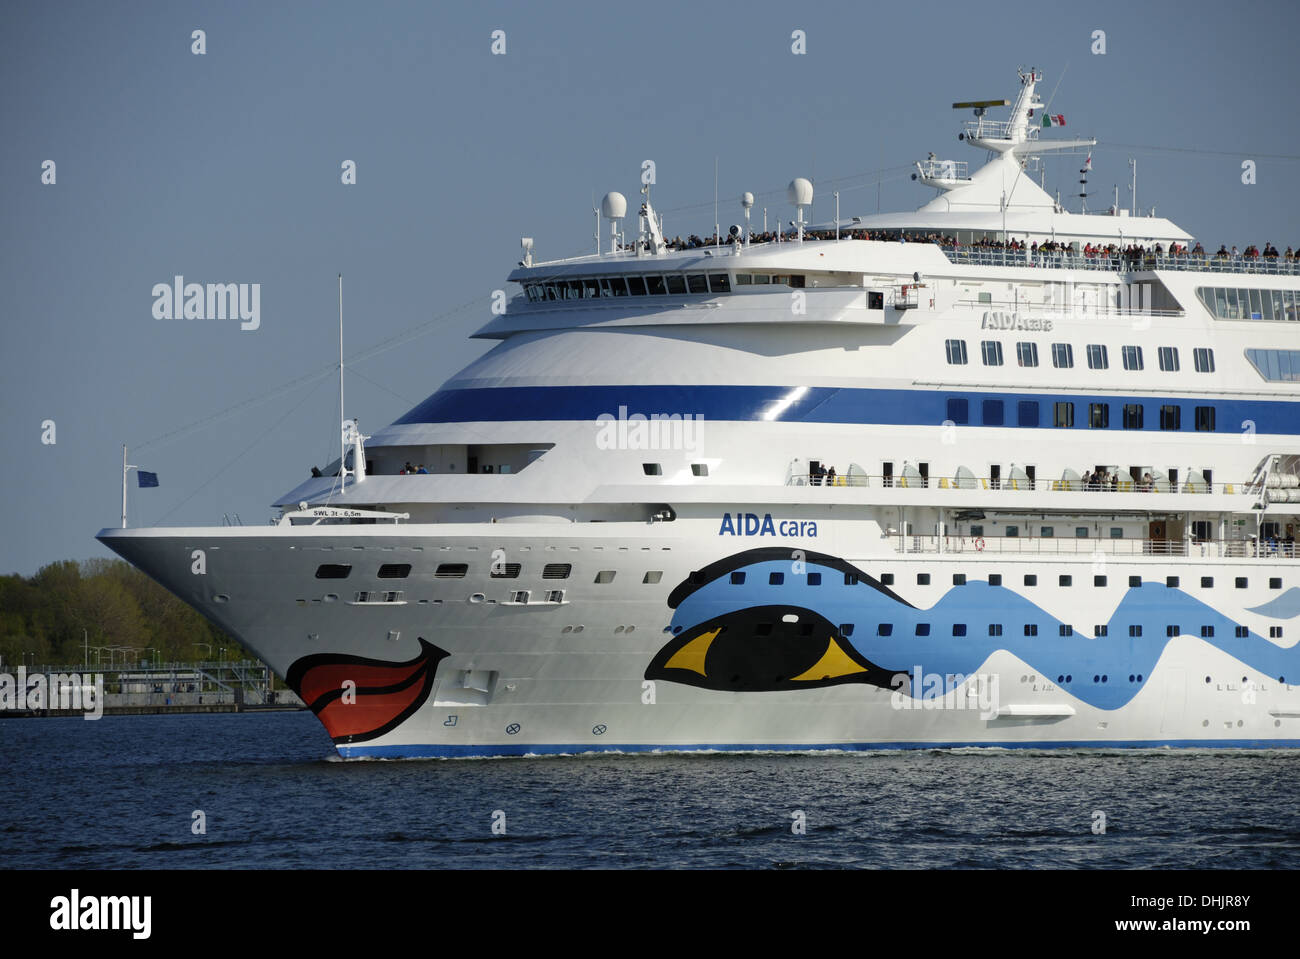 Aida cara cruise ship in -Fotos und -Bildmaterial in hoher Auflösung – Alamy